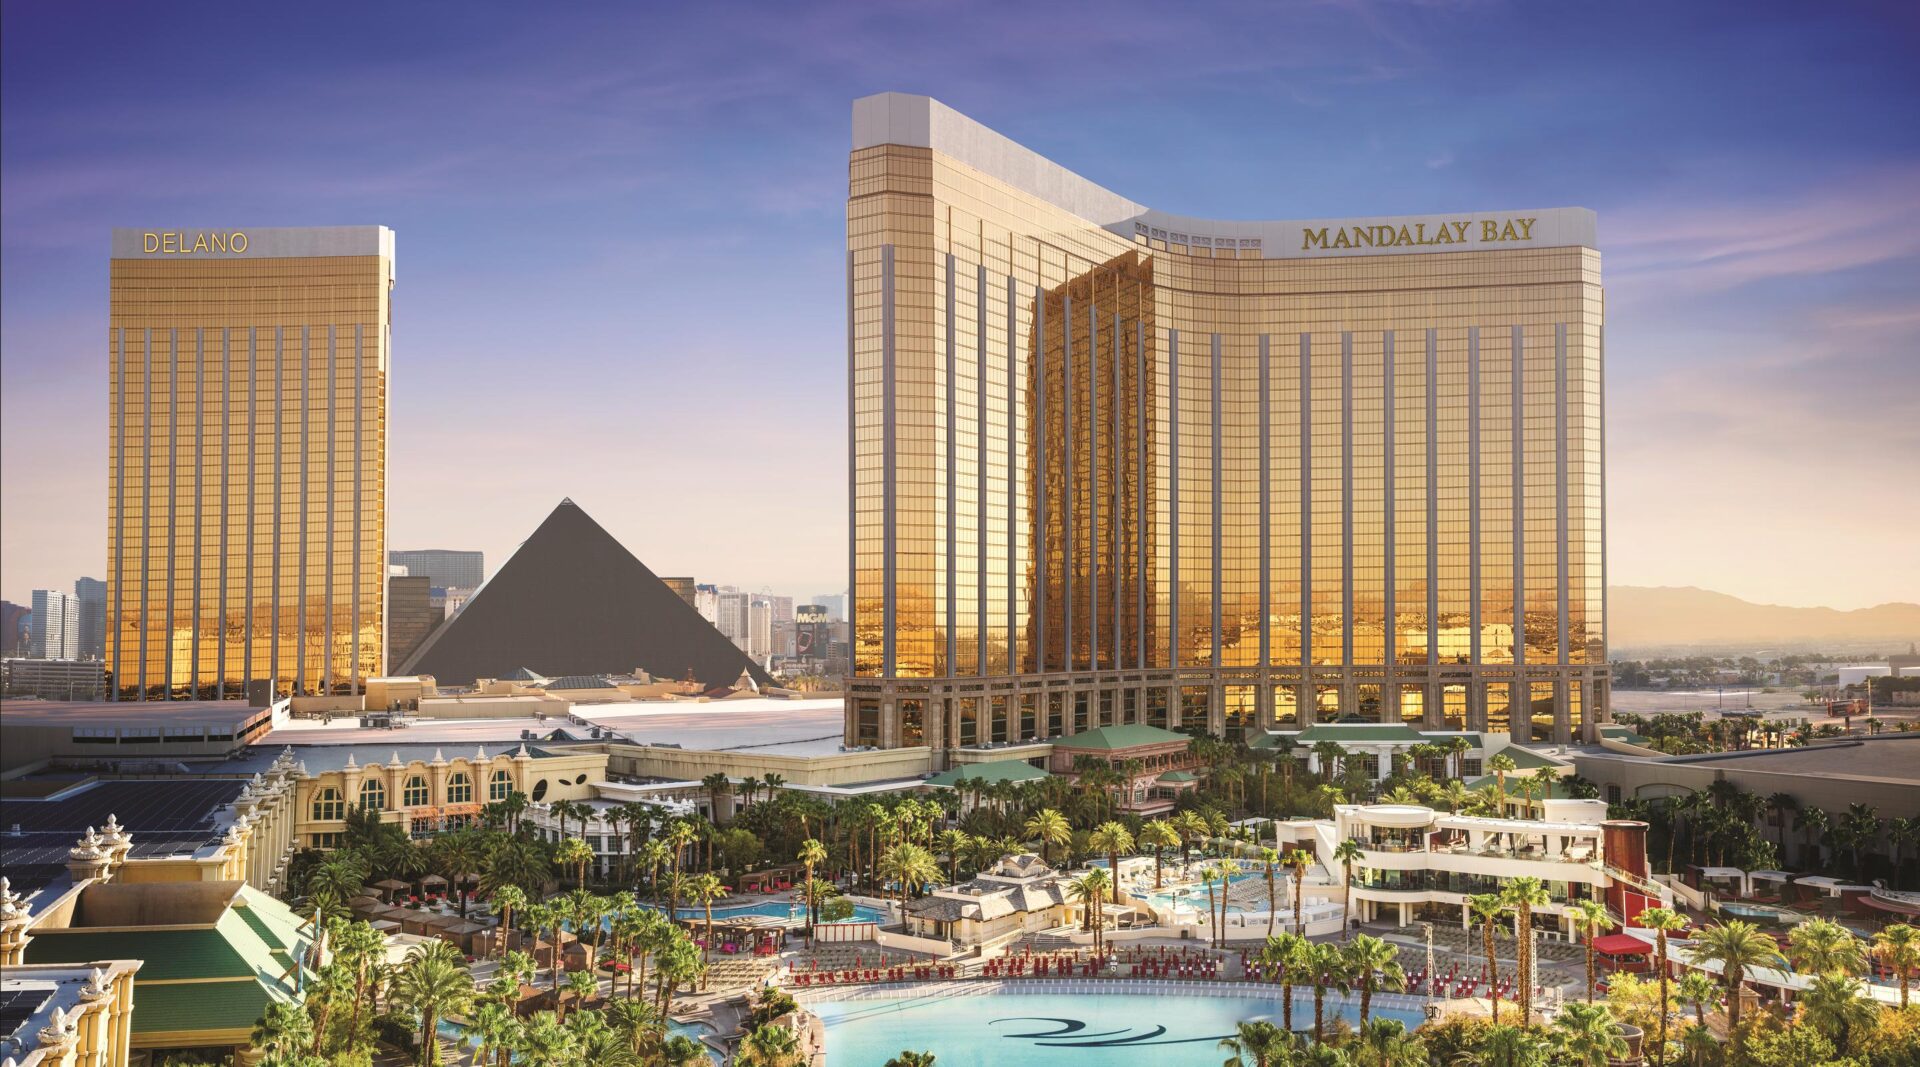 Las Vegas hotels Mandalay Bay review